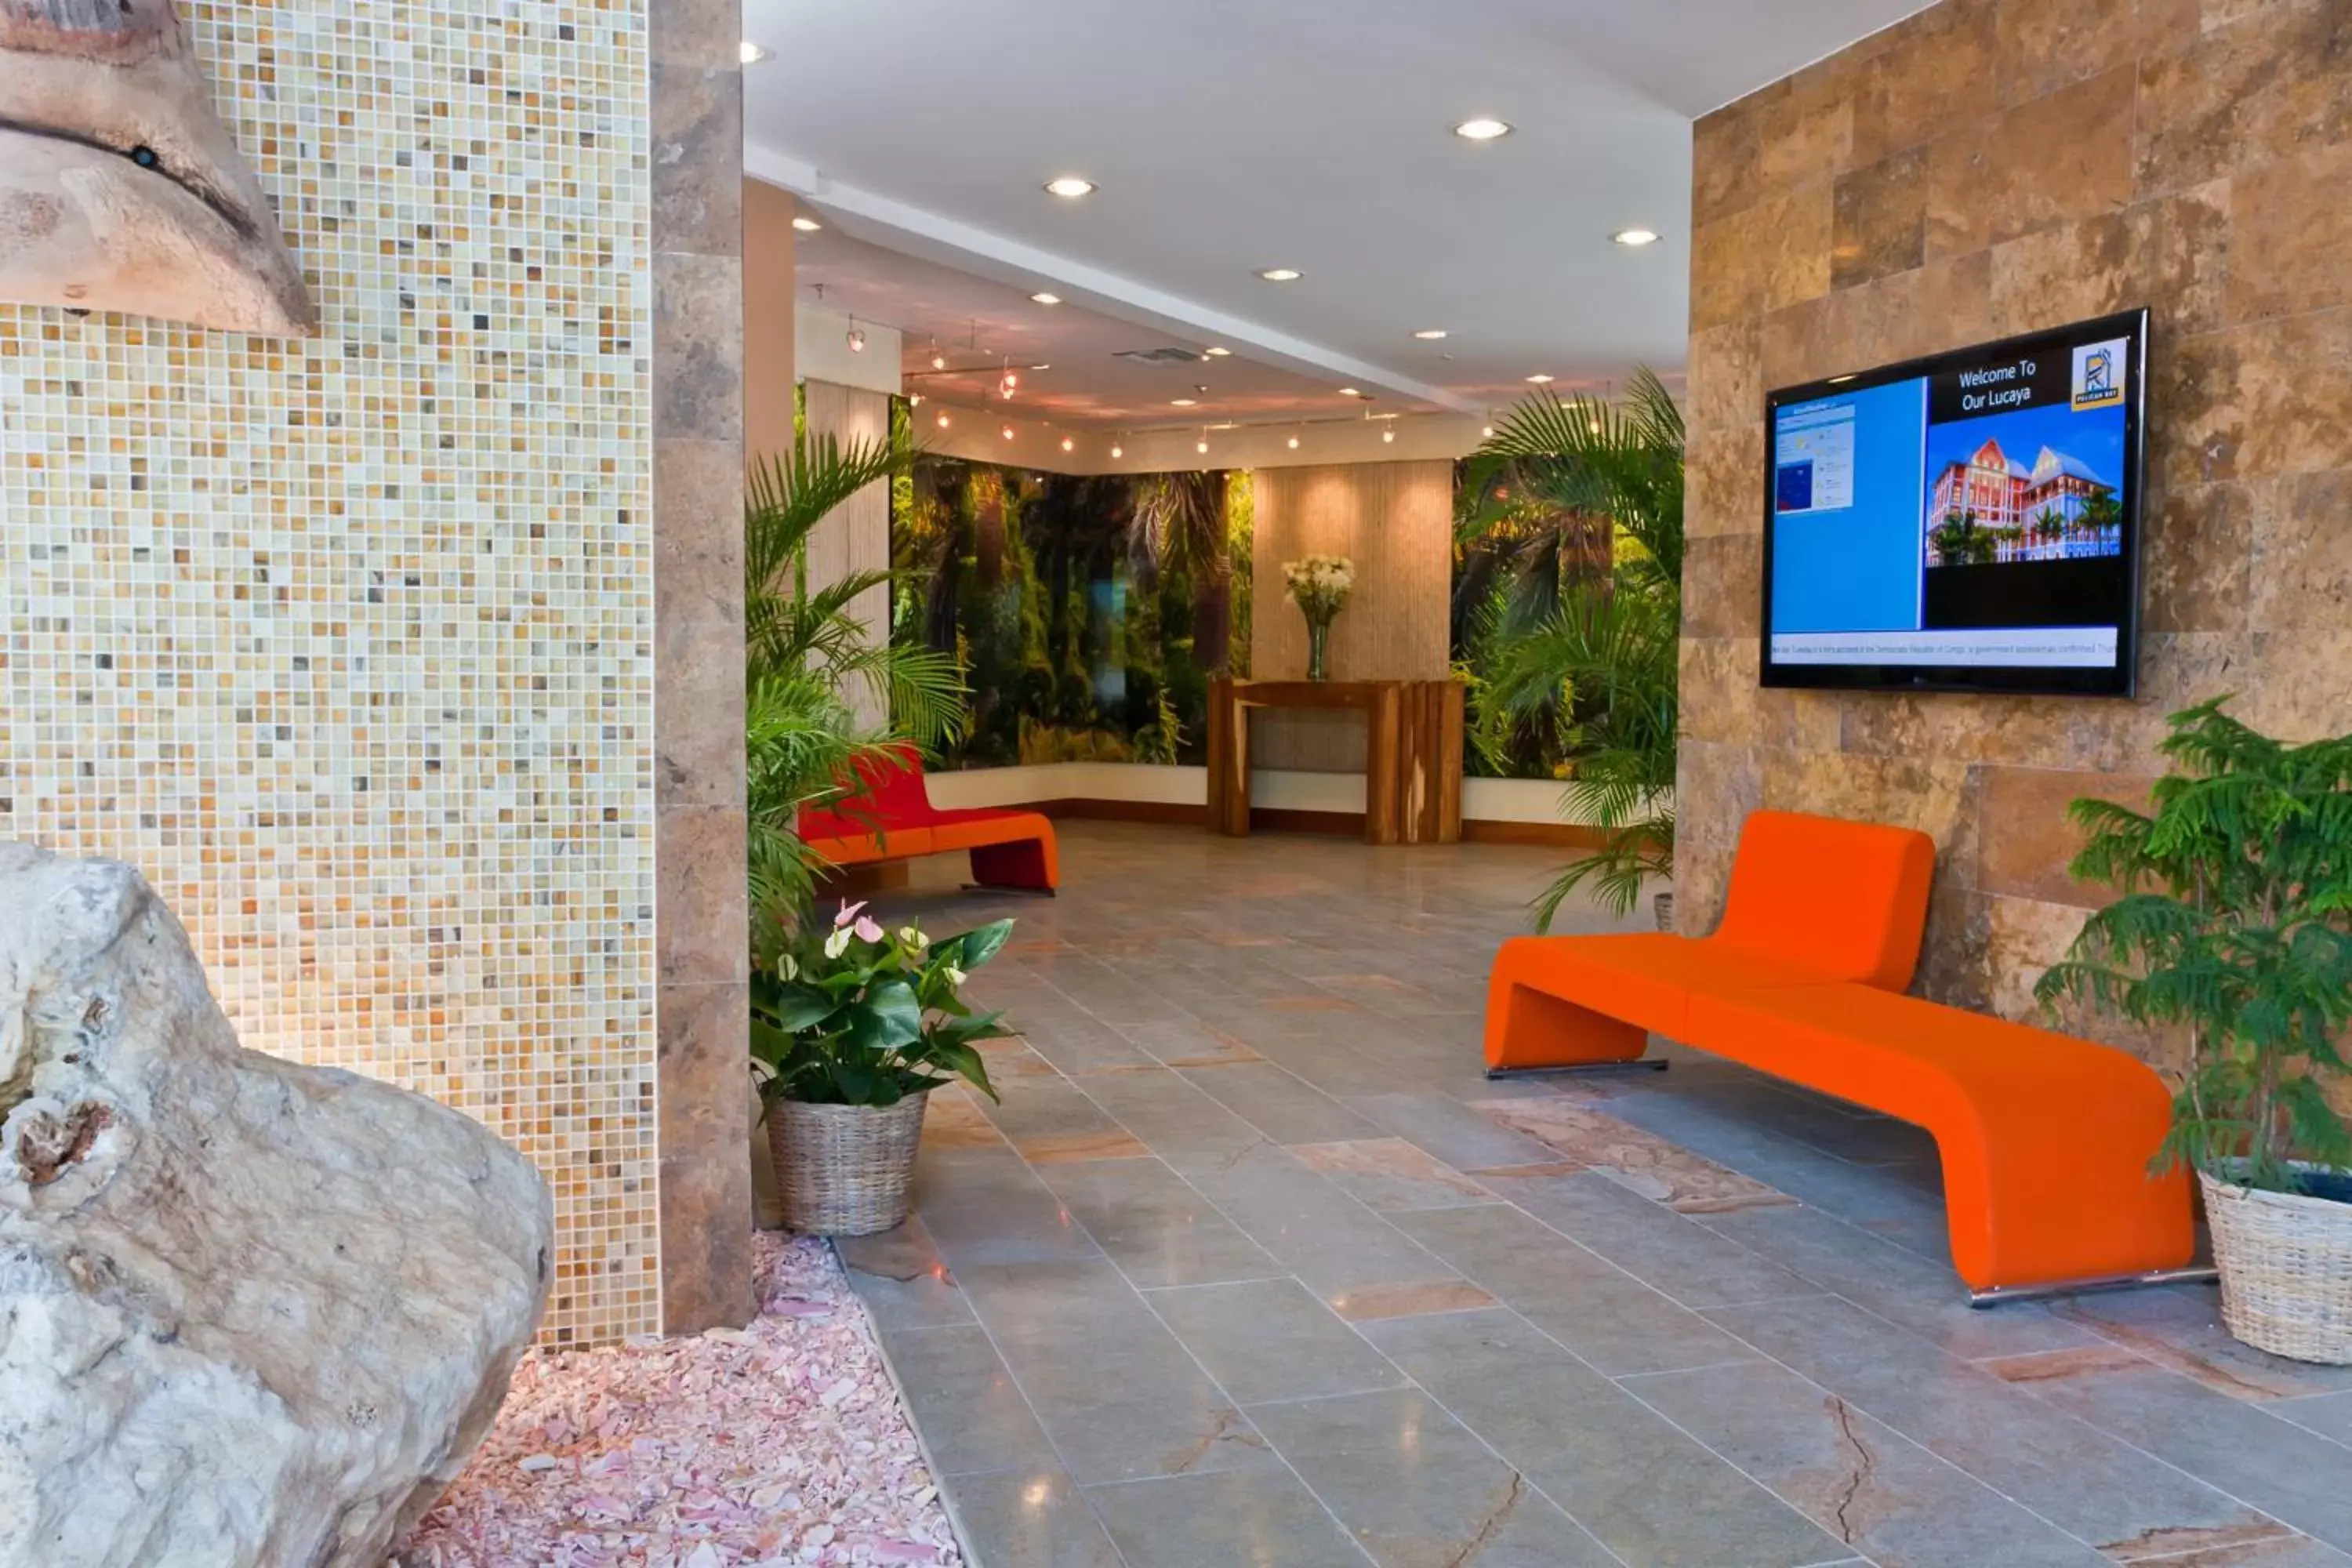 TV and multimedia, Lobby/Reception in Pelican Bay Hotel